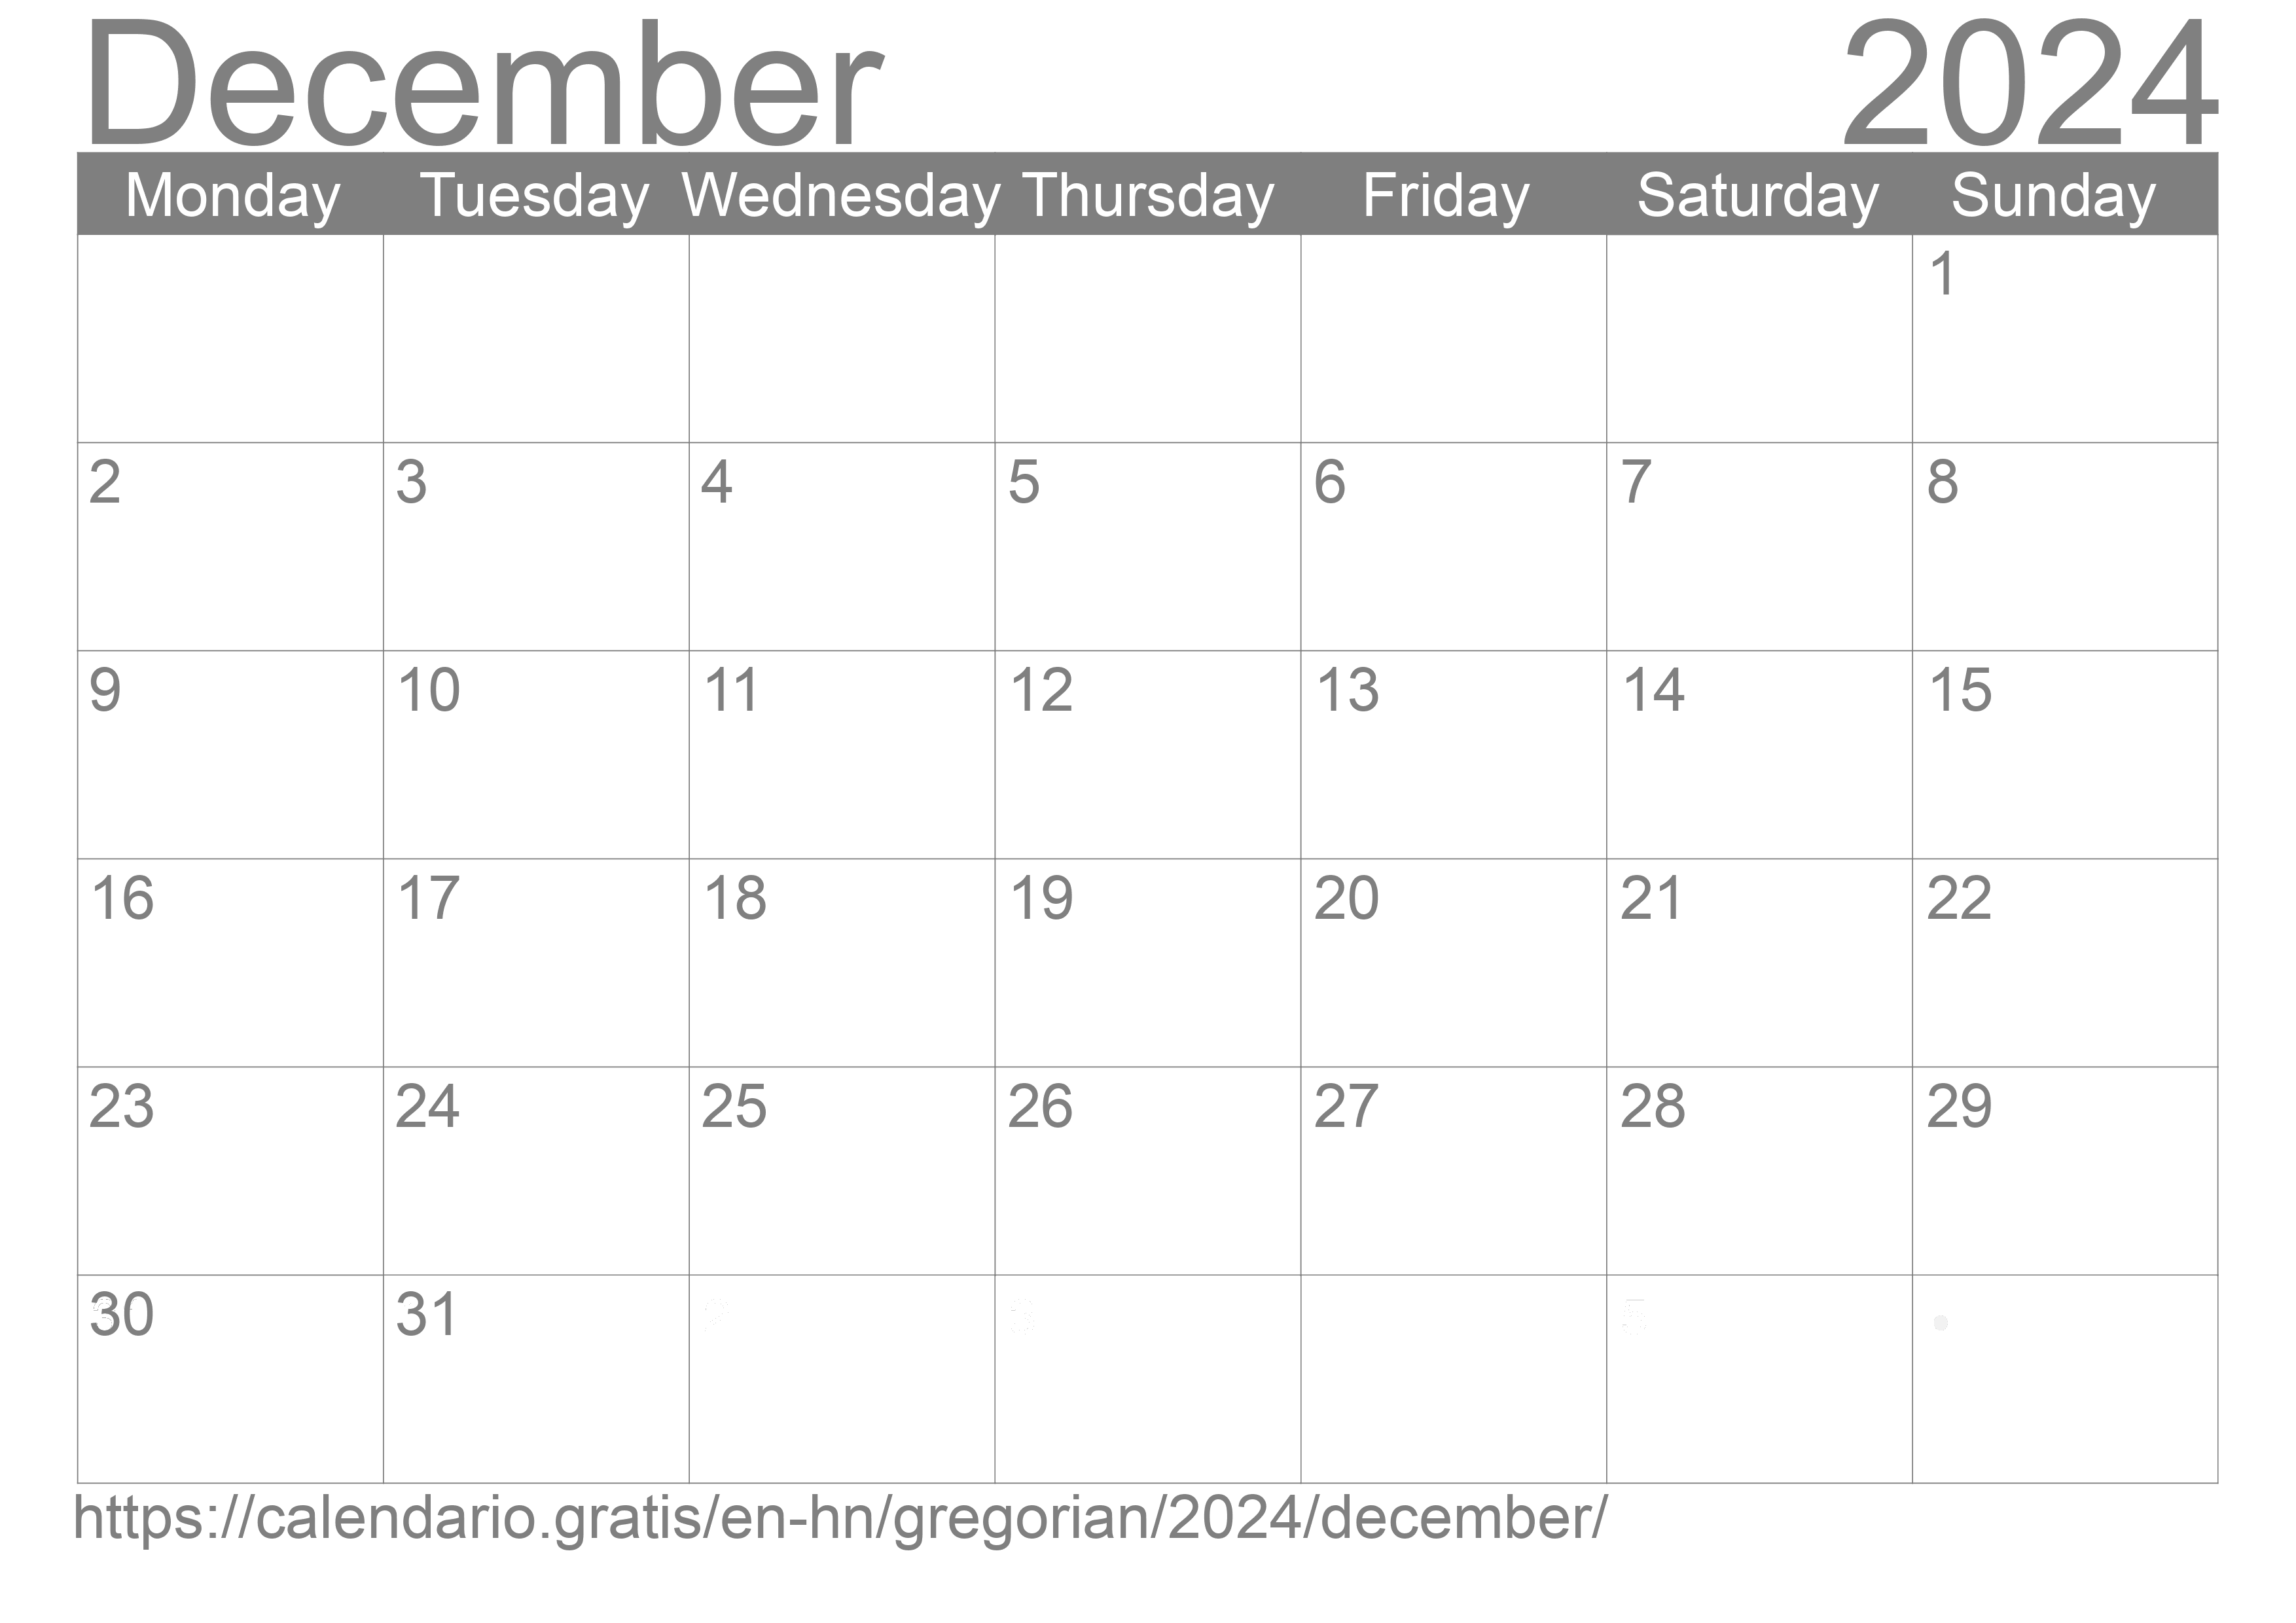 Calendar December 2024 to print